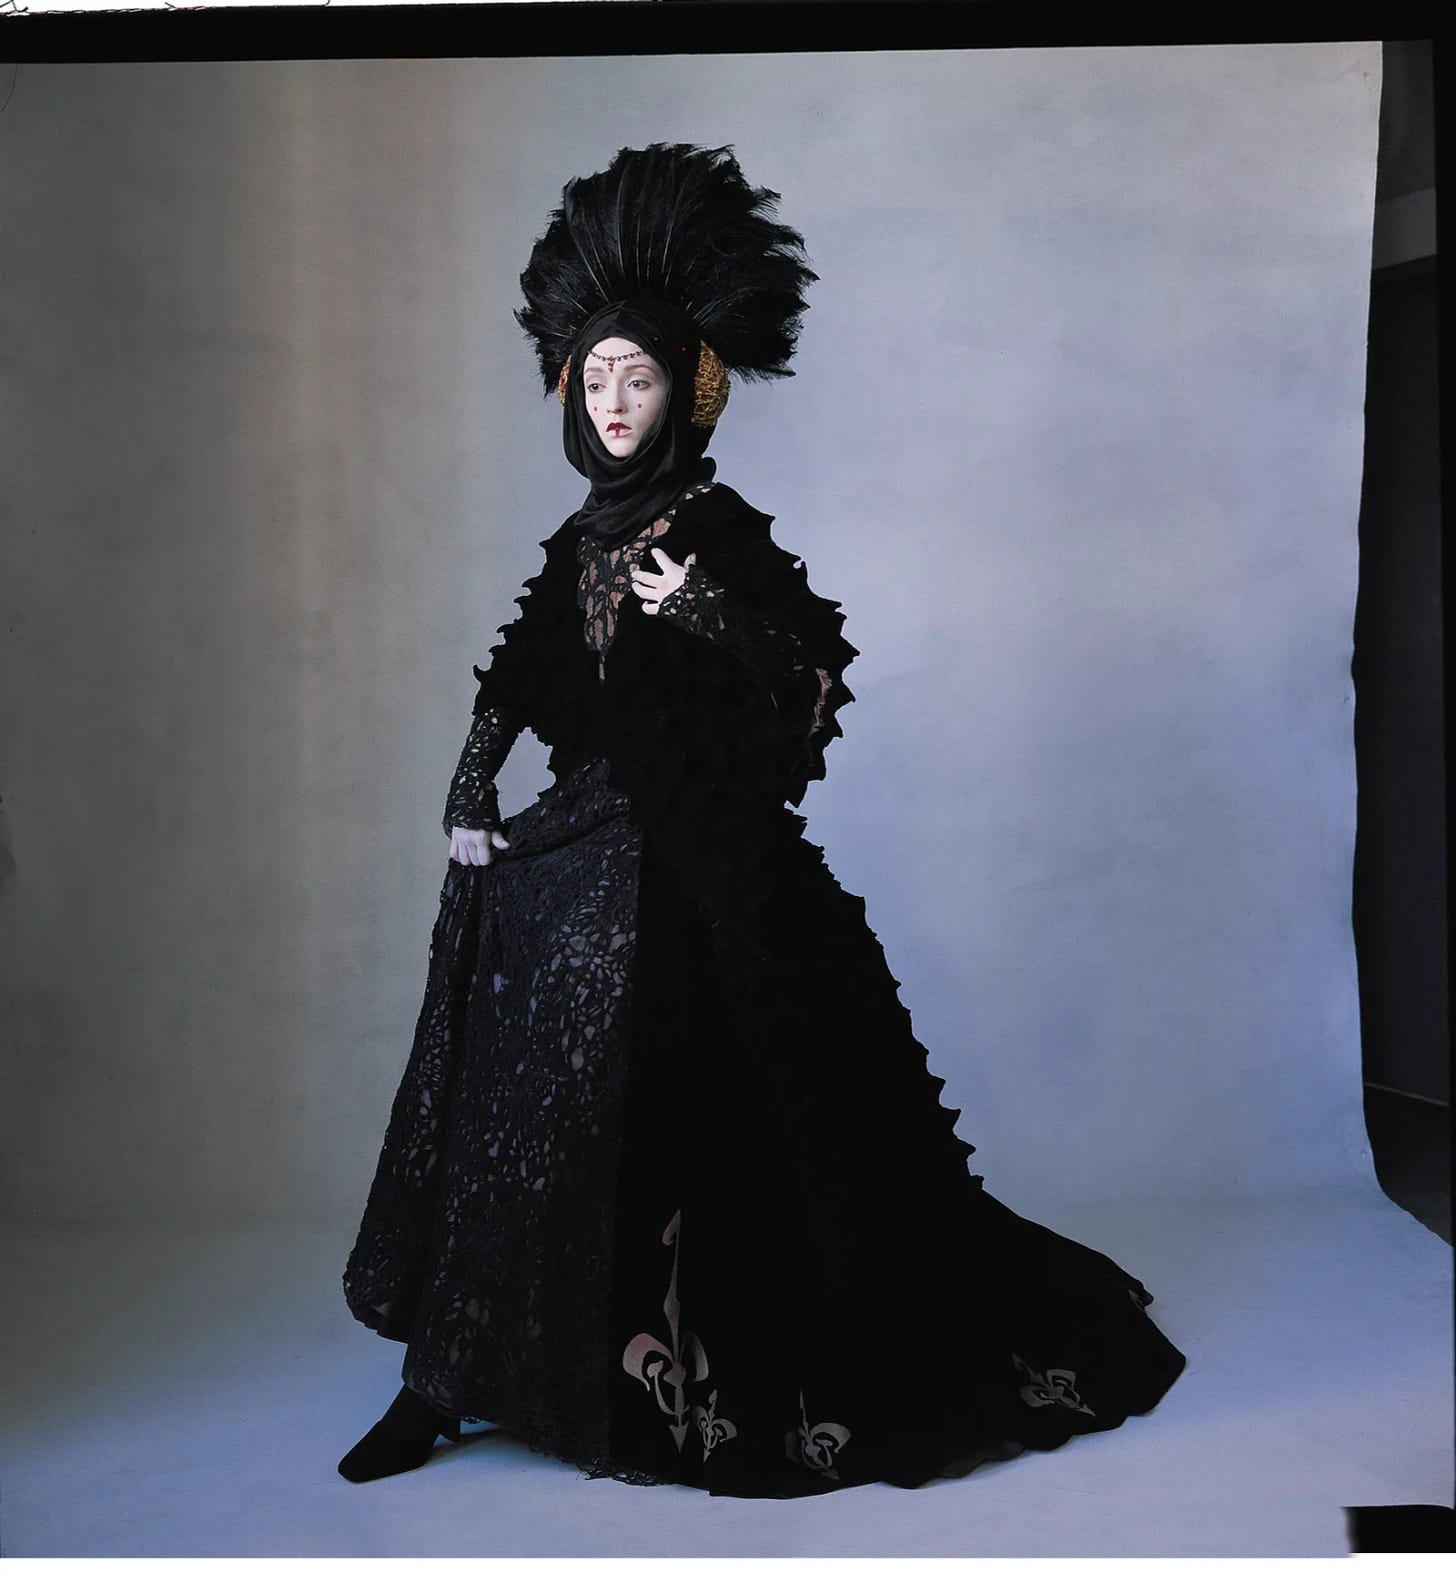 A woman wearing an ornate black dress and headdress